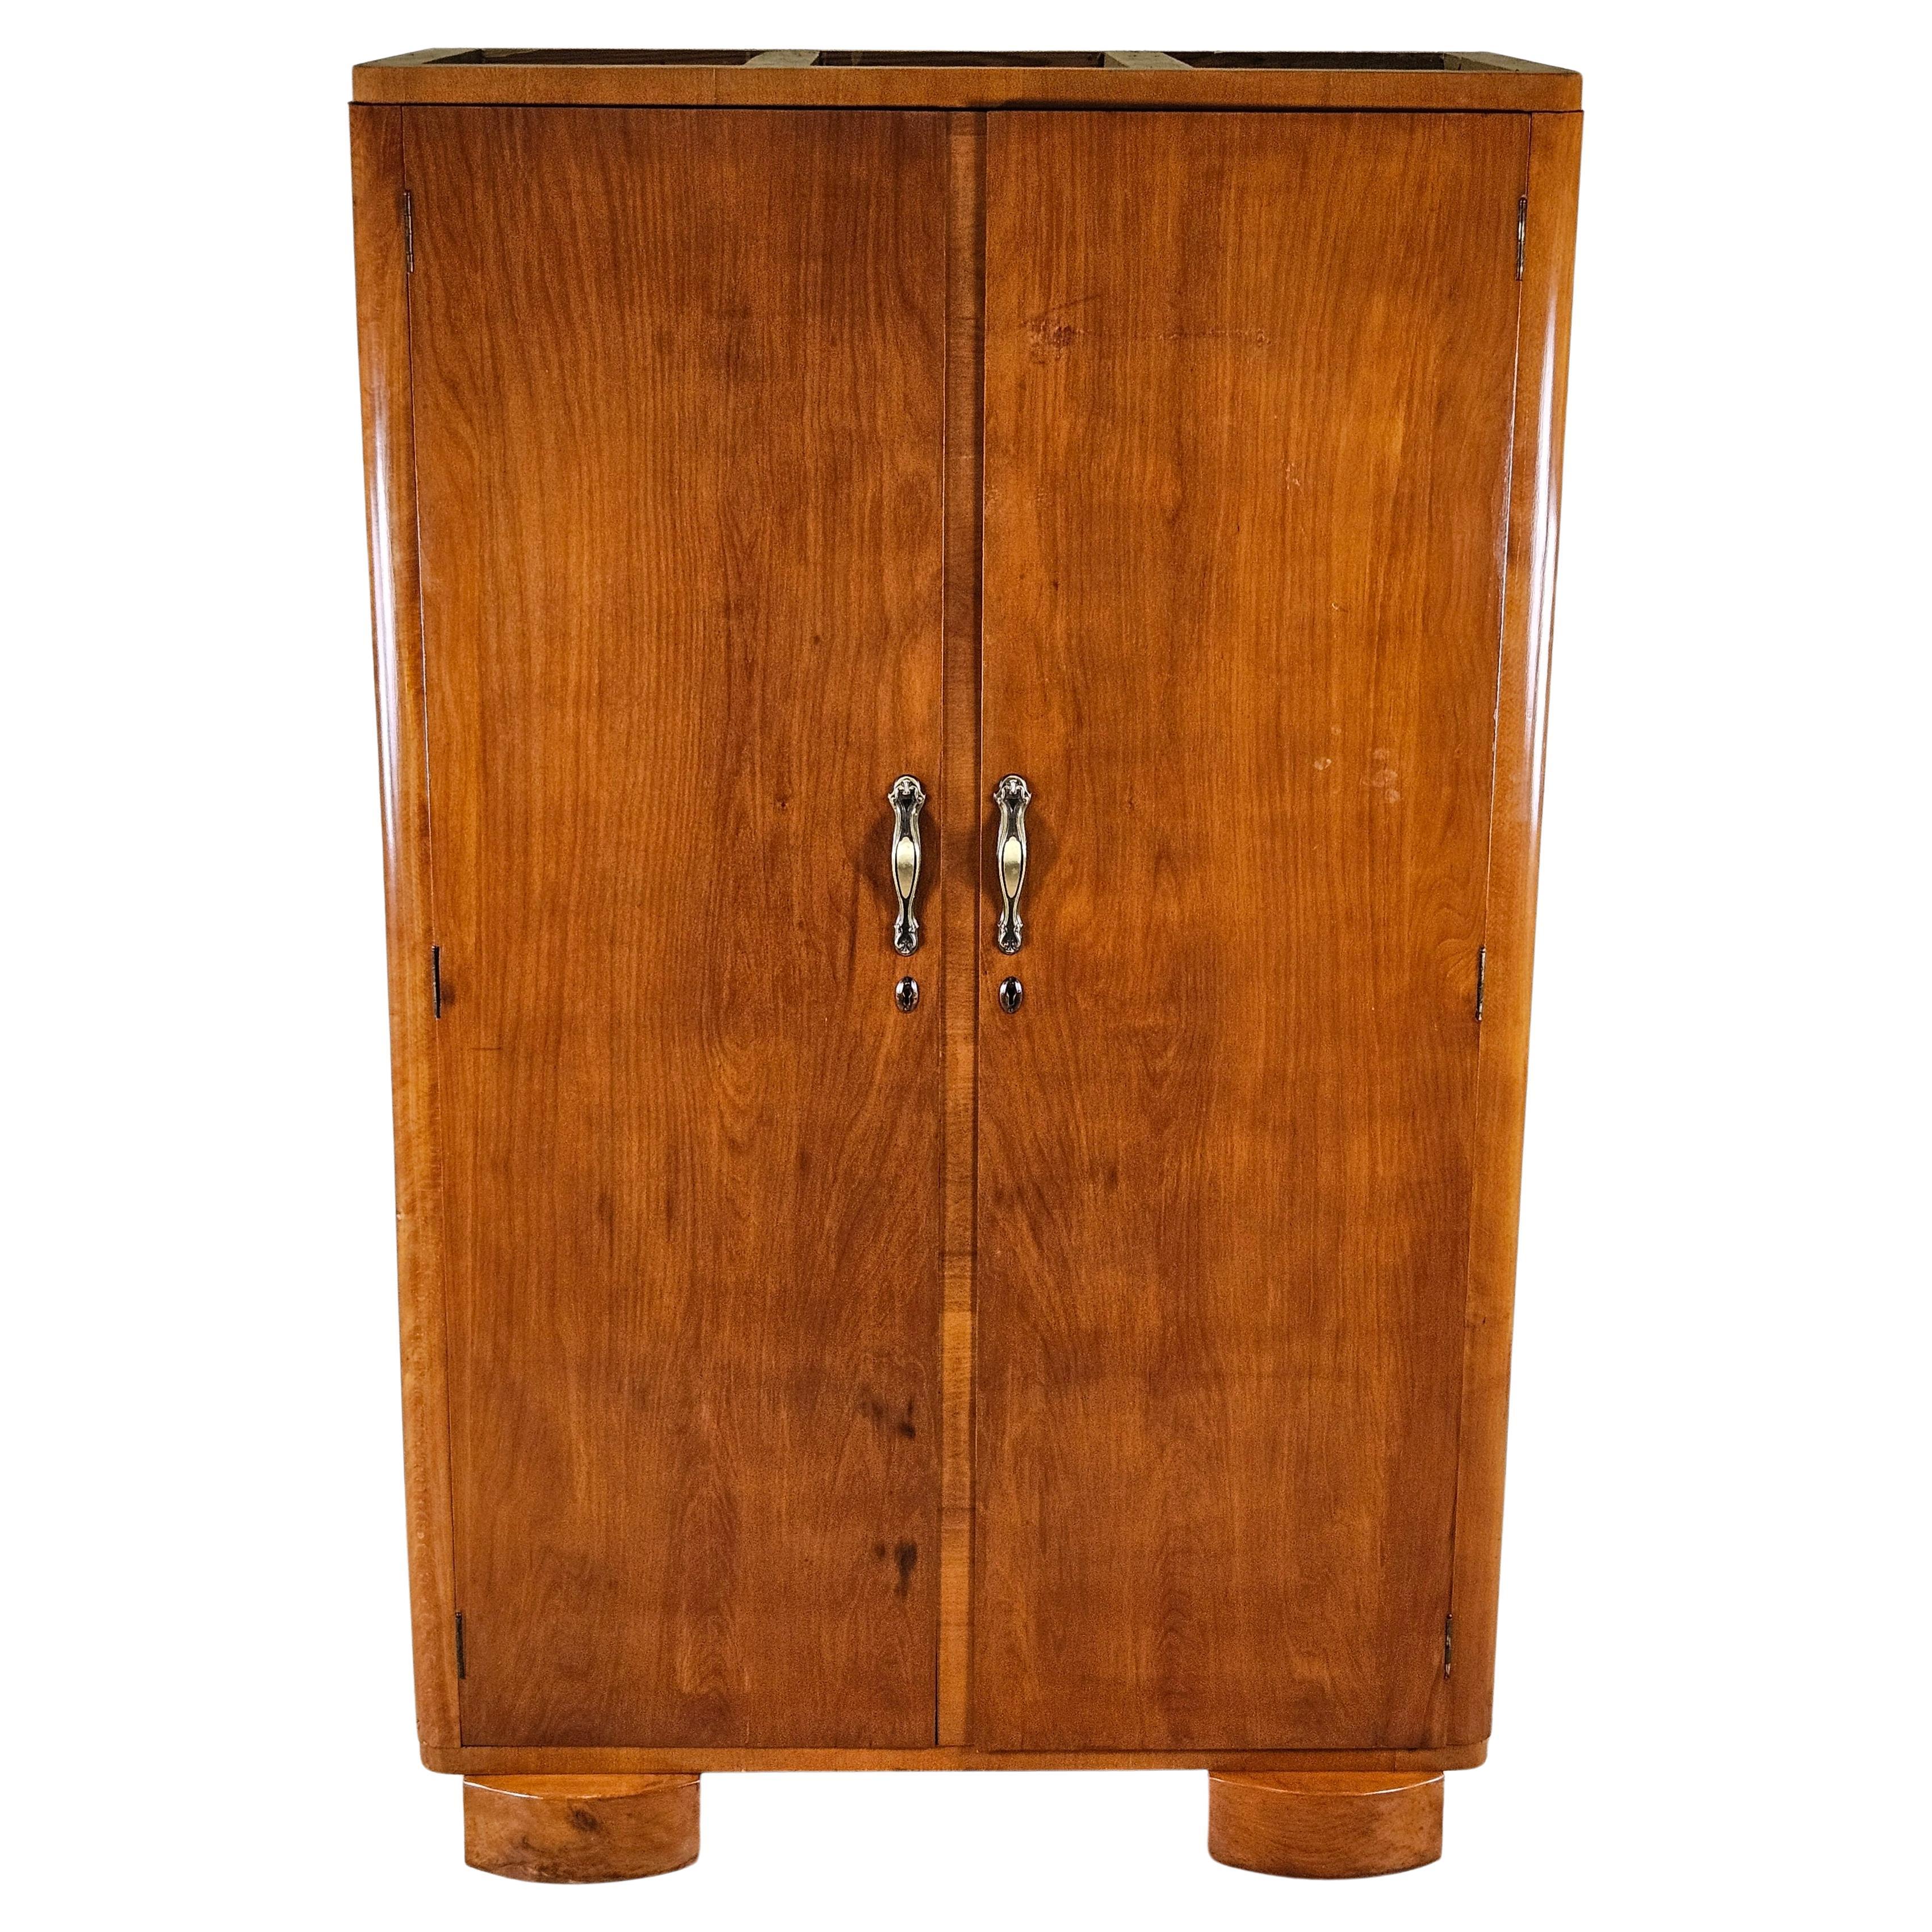 Two-door walnut closet with brass handles 20th century